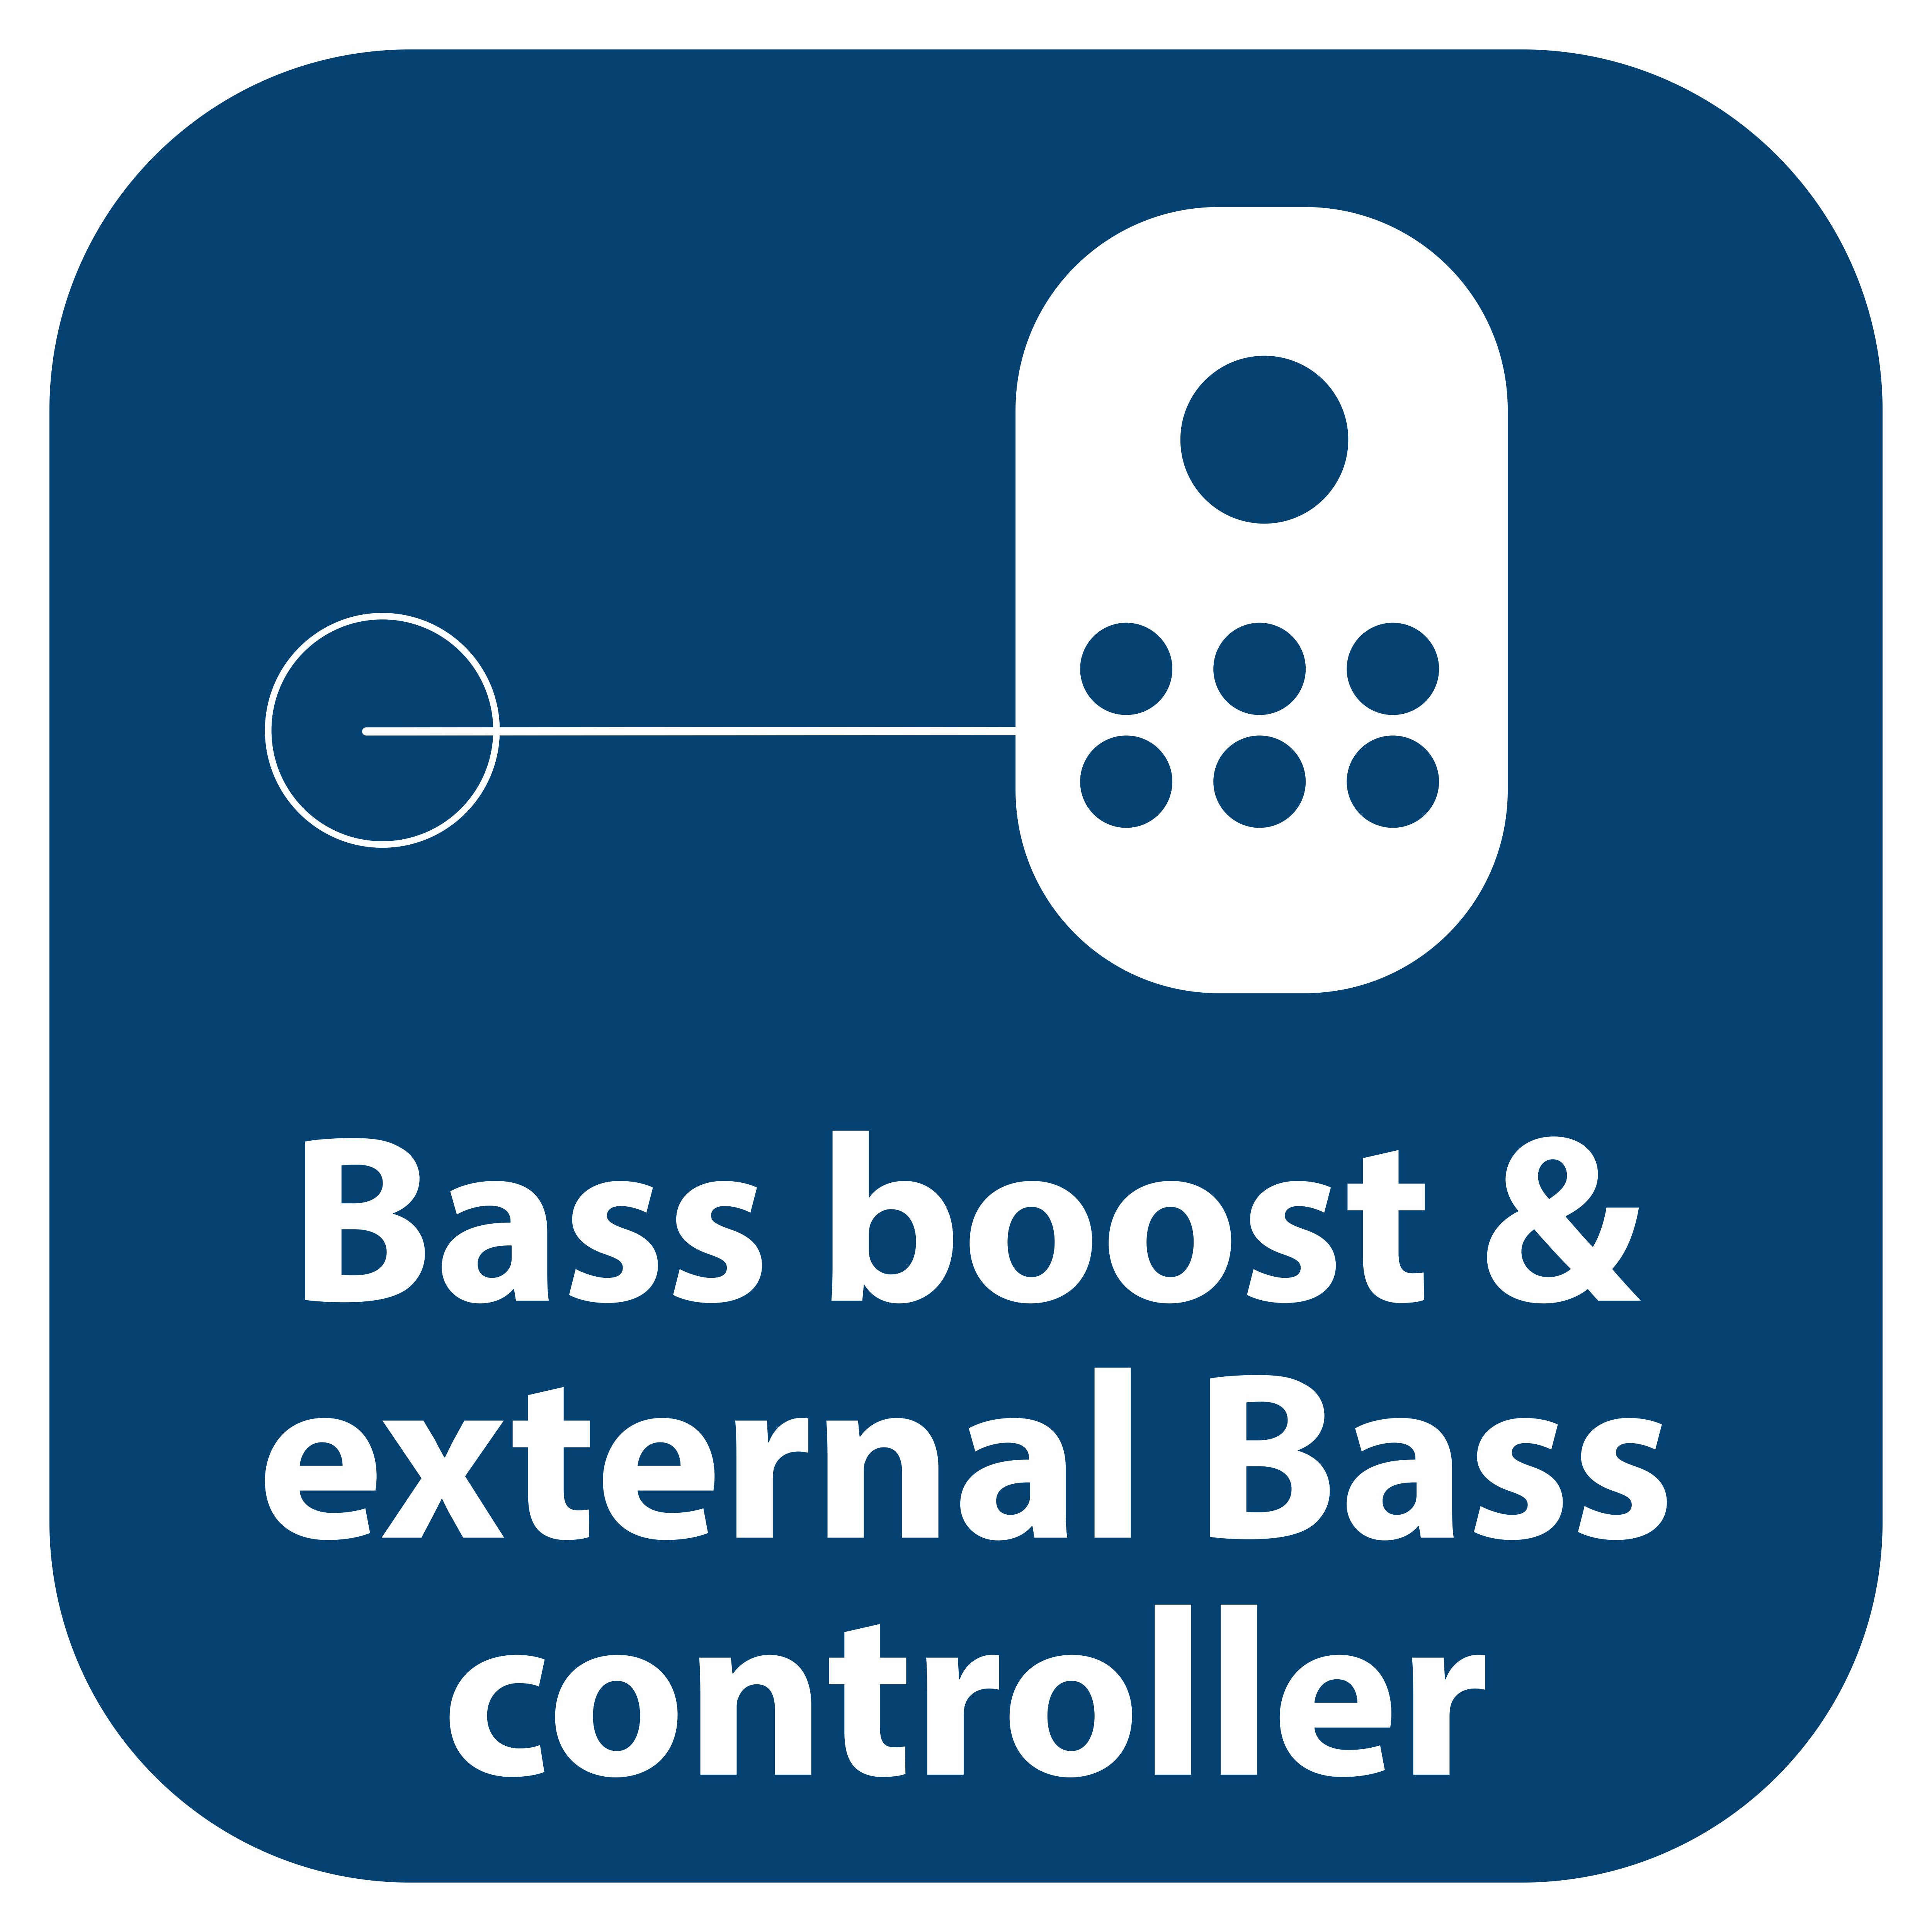 Bass Boost & External Bass Controller included in packaging